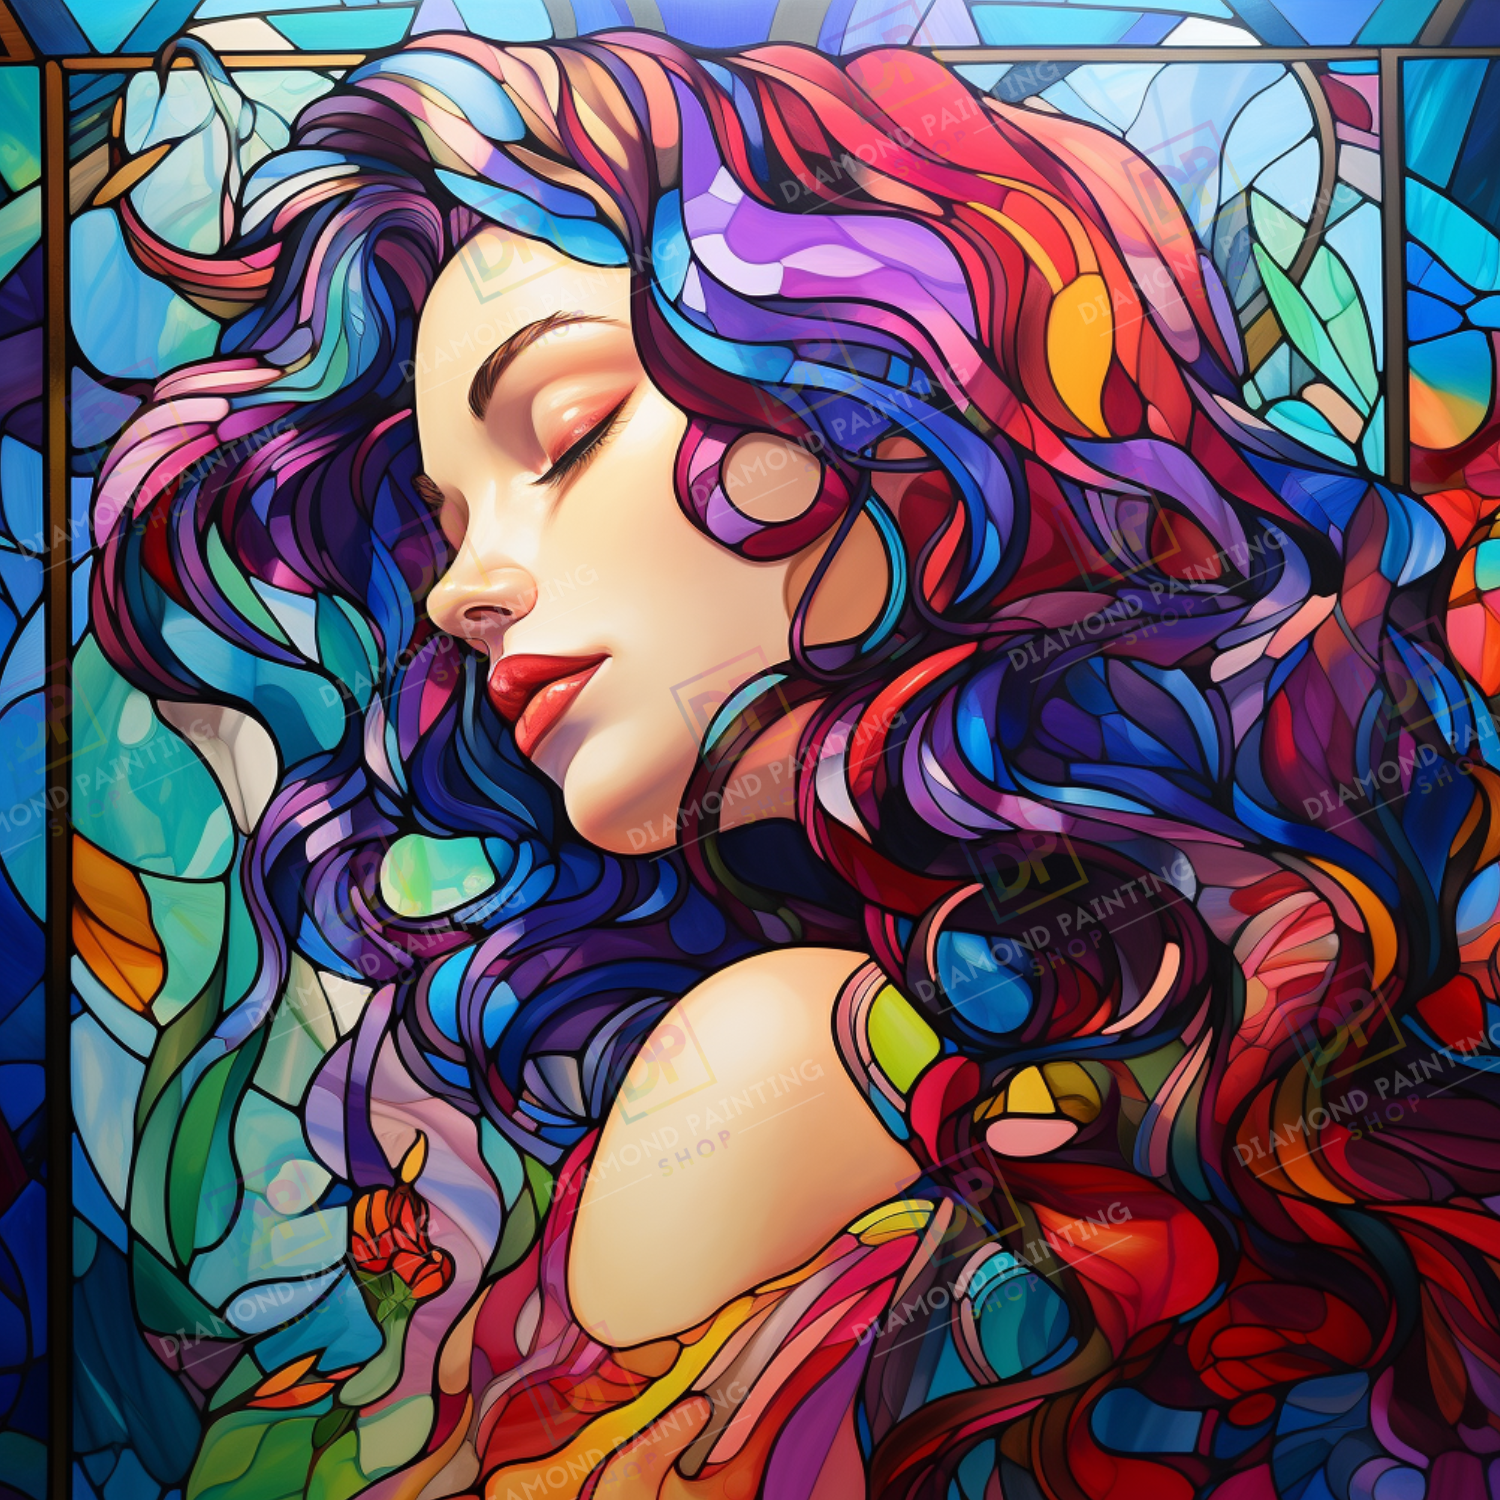 Januar | Glaskunst Mademoiselle mit AB Farben